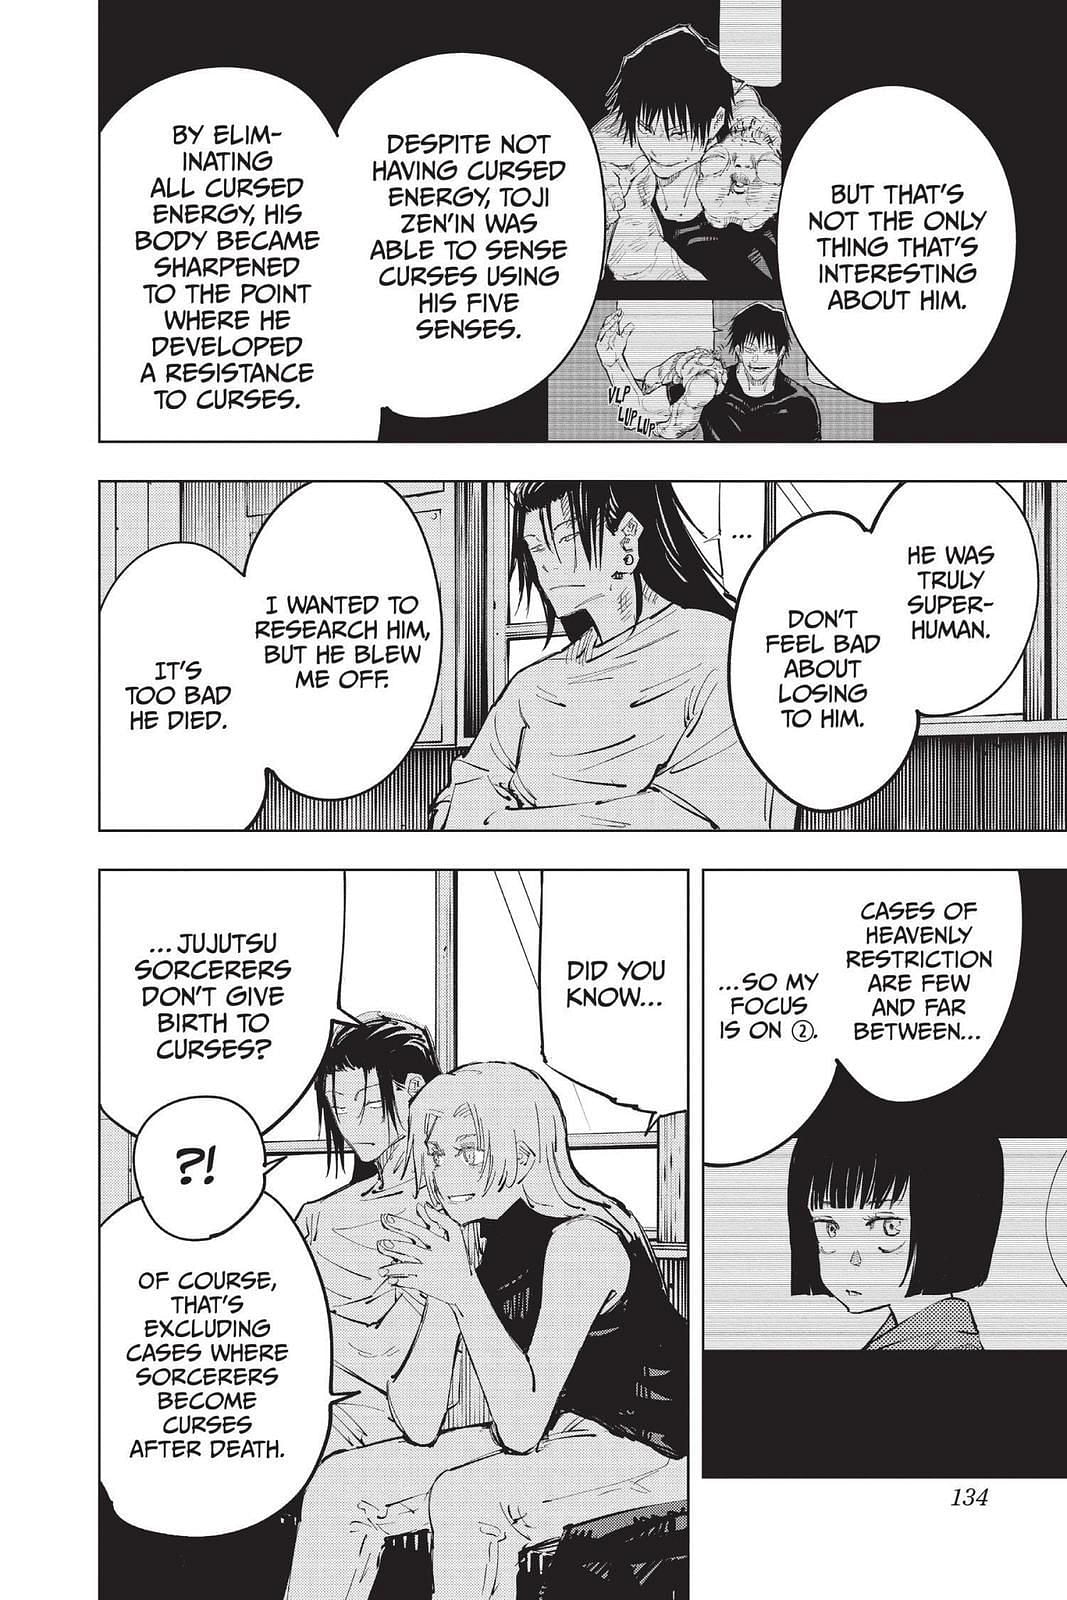 Manga panel from Jujutsu Kaisen Chapter 77 shows a young Maki Zen&#039;in (Image via Shueisha)